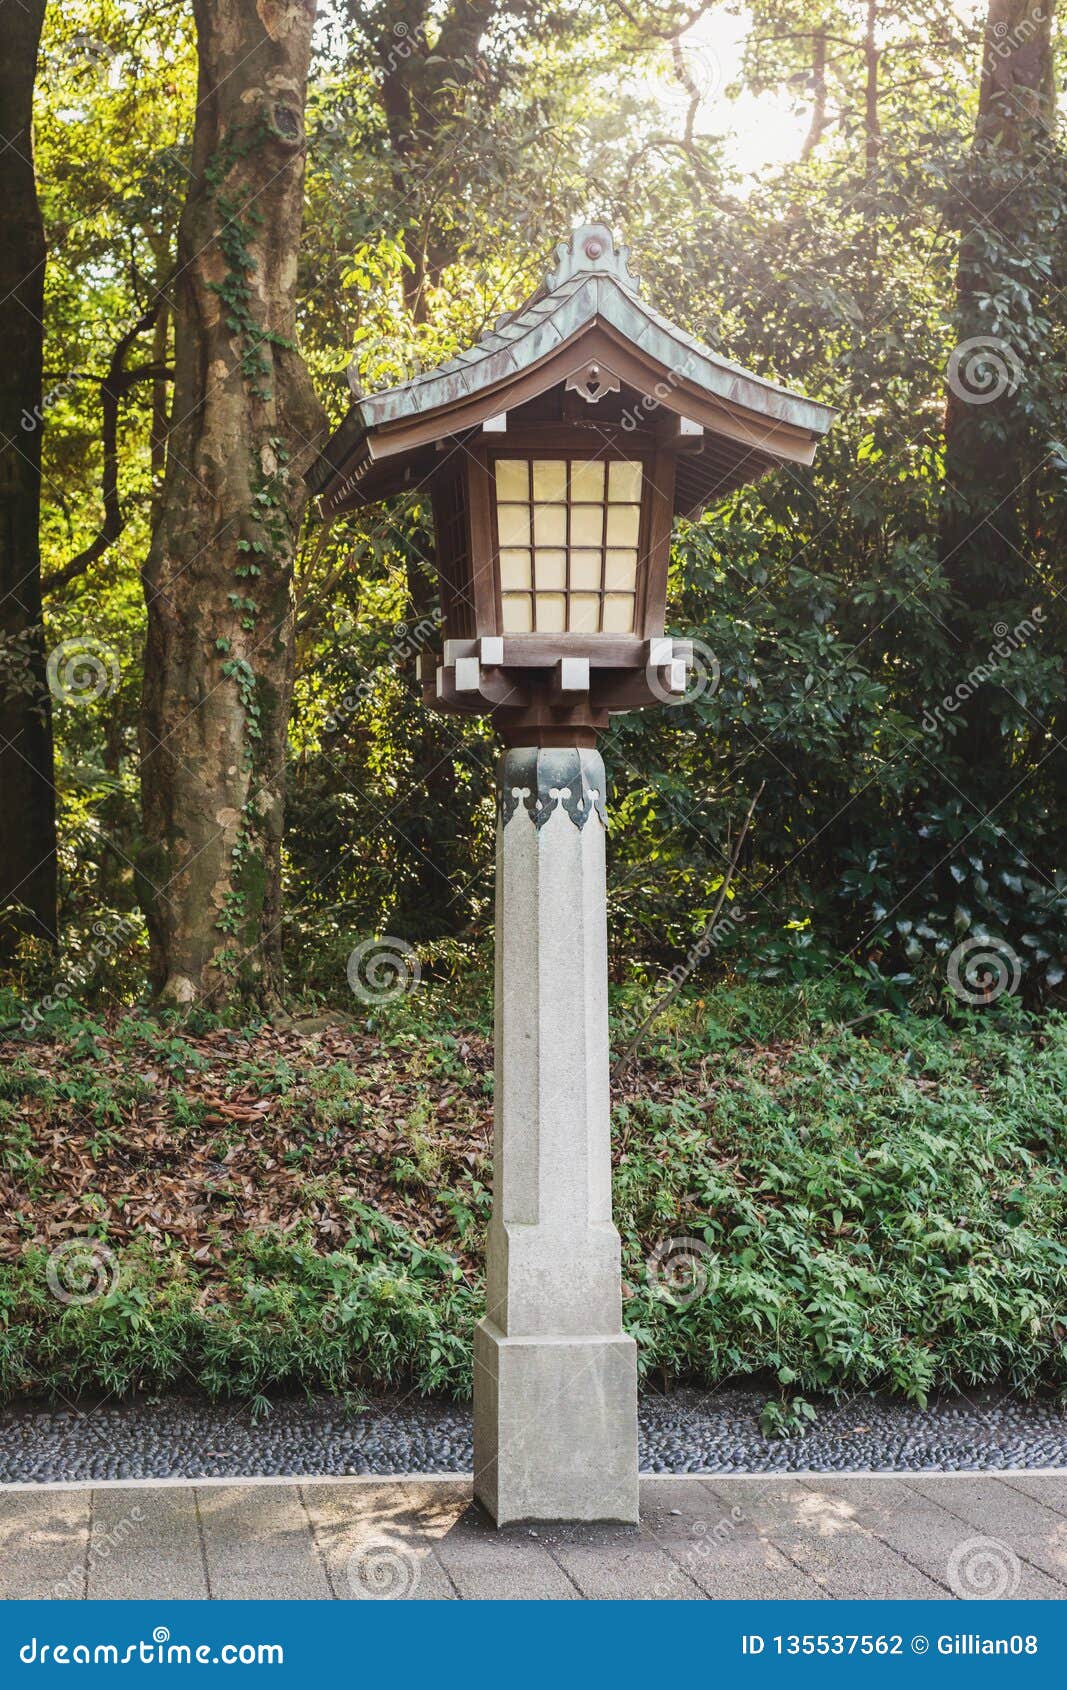 Lampost at shrine stock photo. Image of lamp, ornamental - 135537562